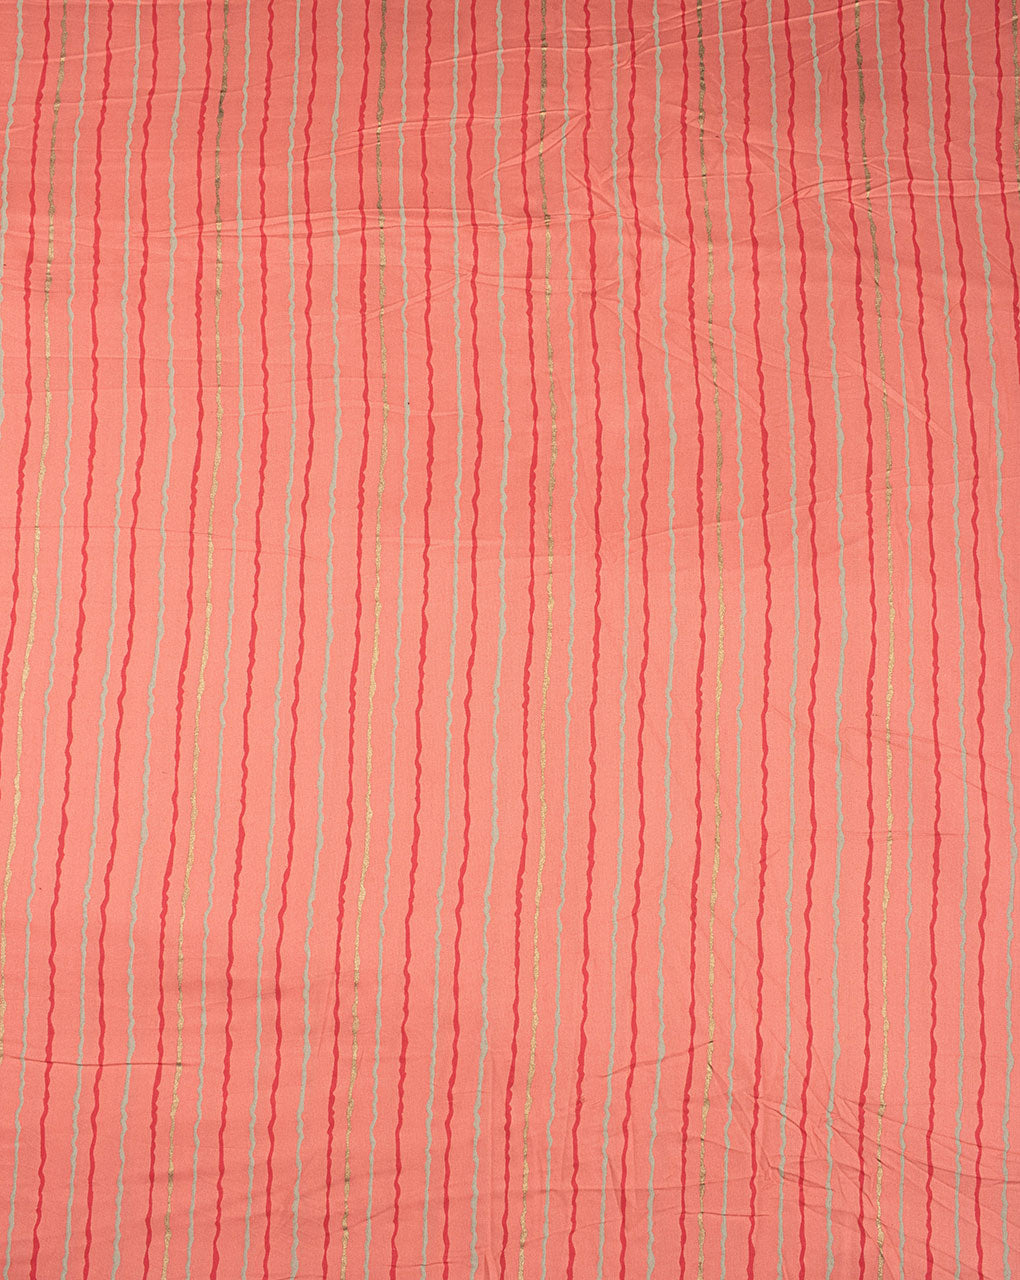 Foil Screen Print Rayon Fabric - Fabriclore.com